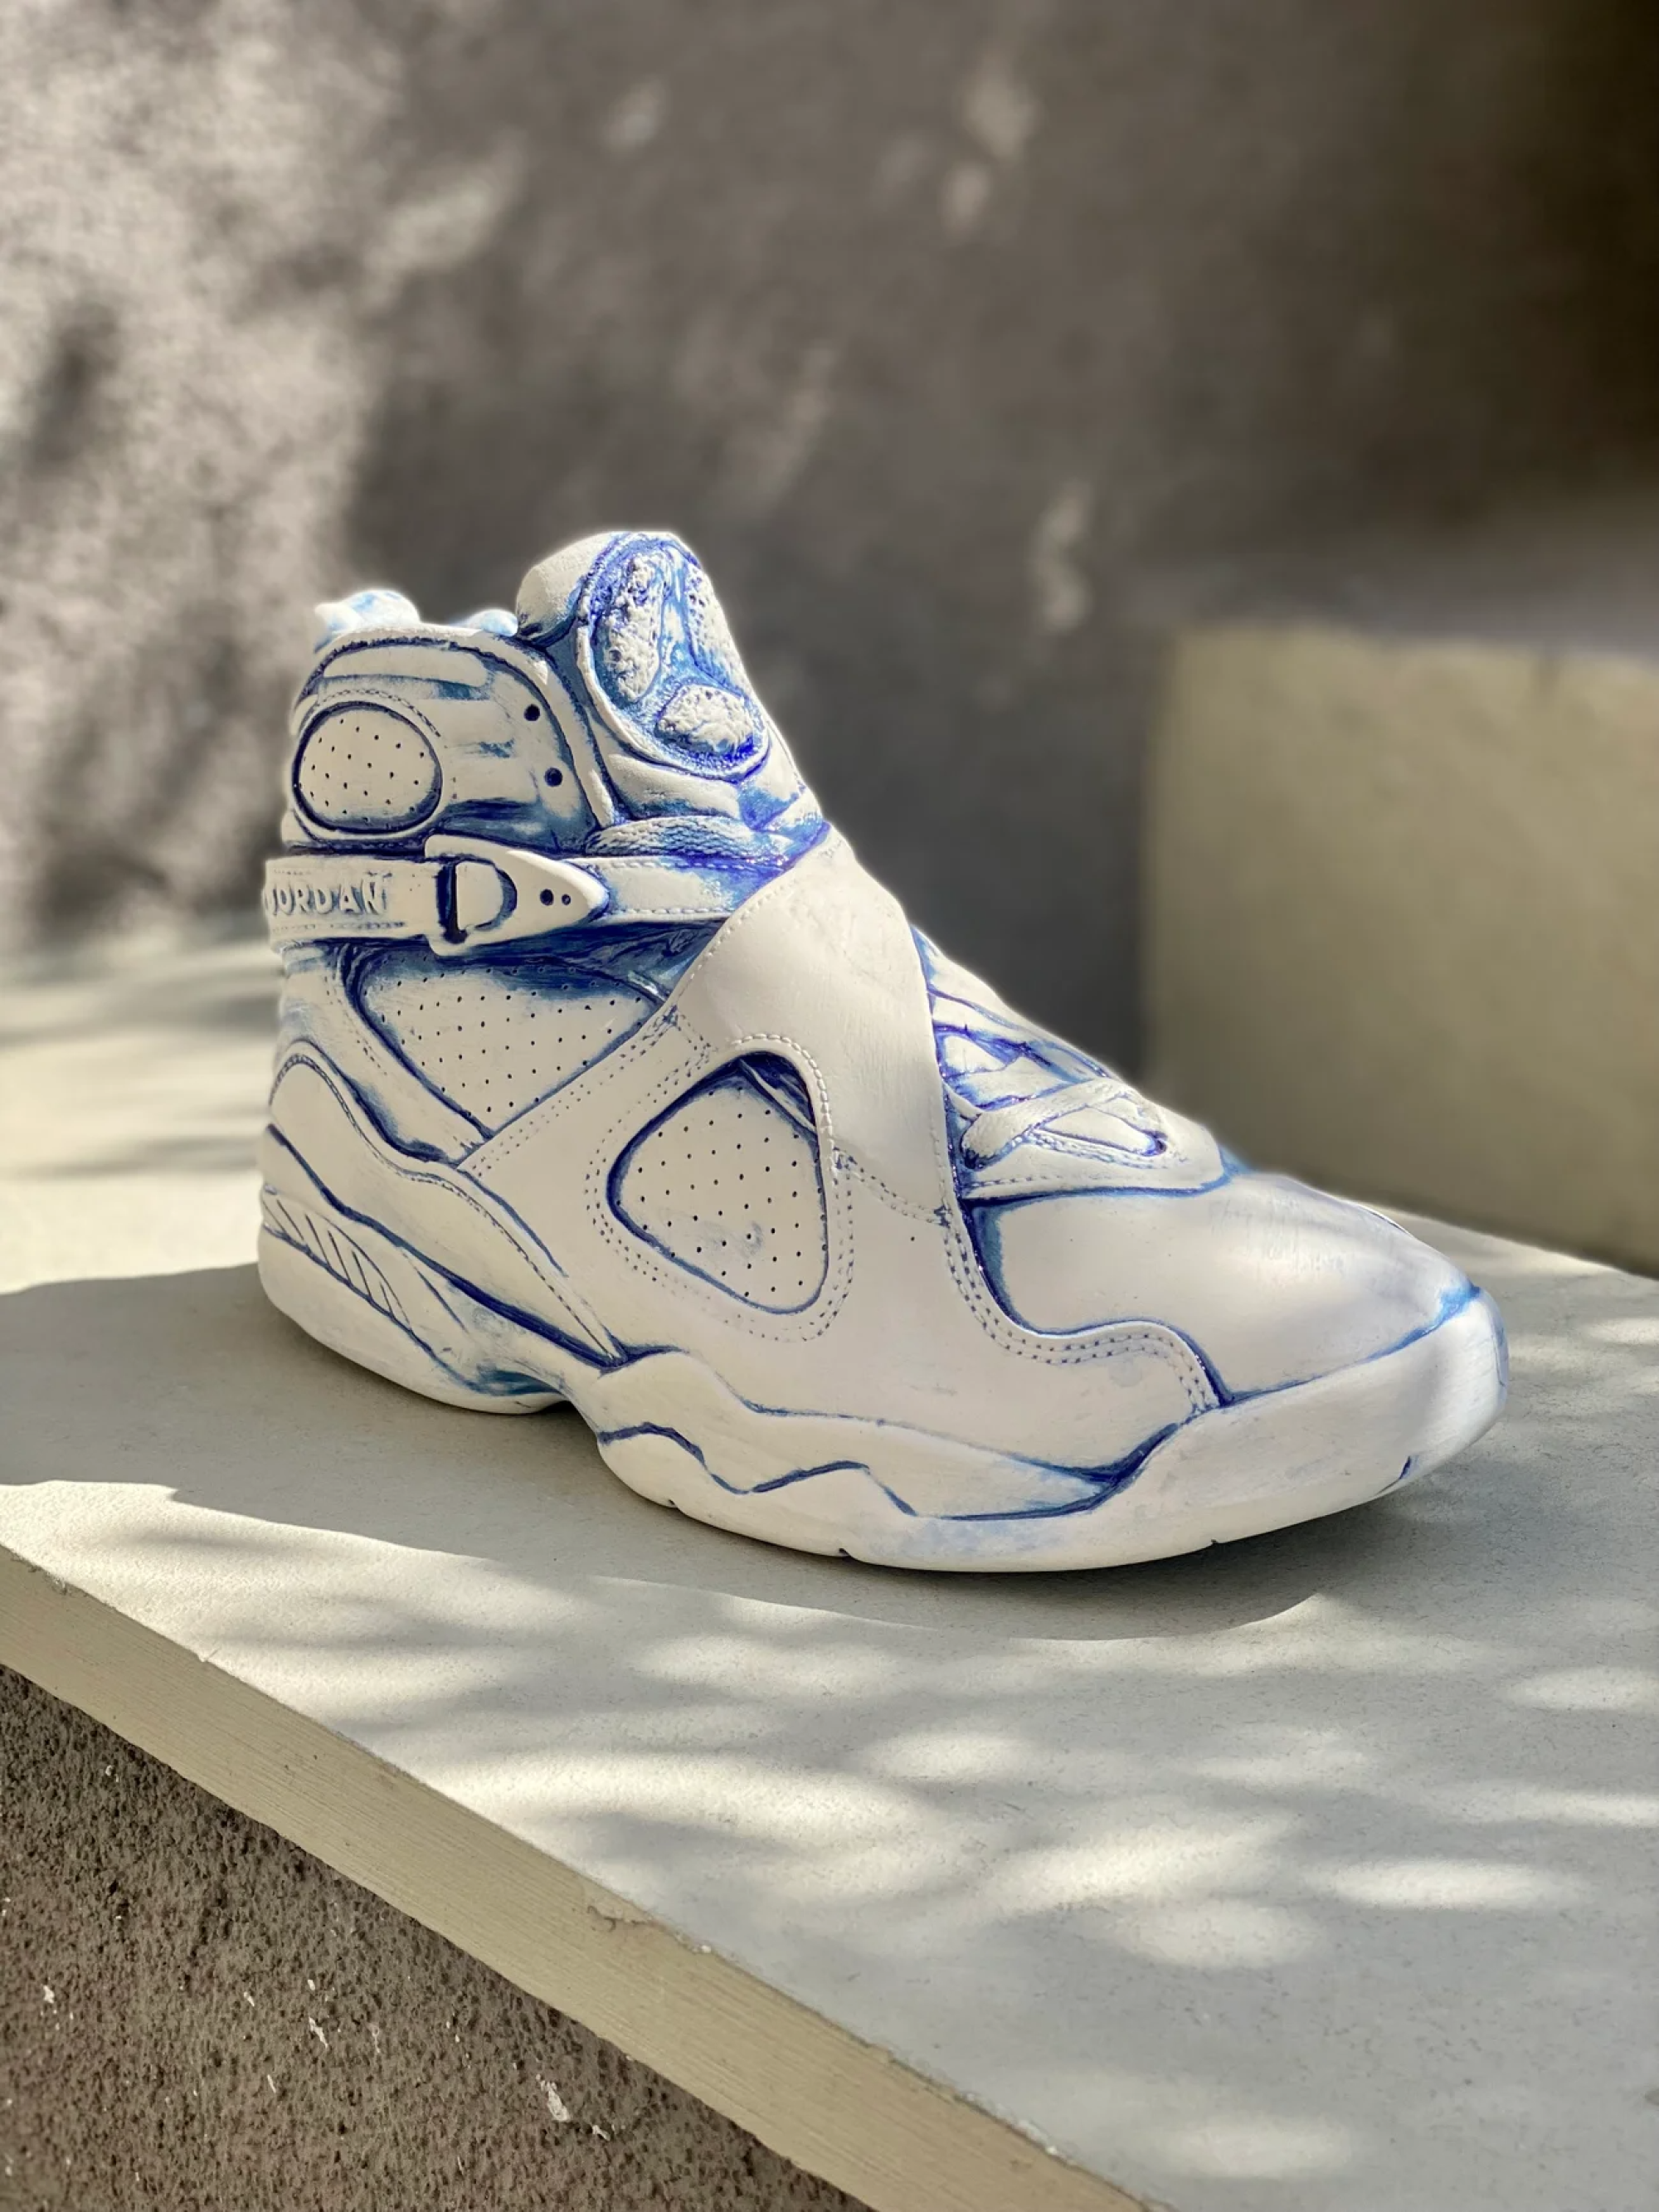 Ceramic sneaker made by Porcelain Sneakerhead